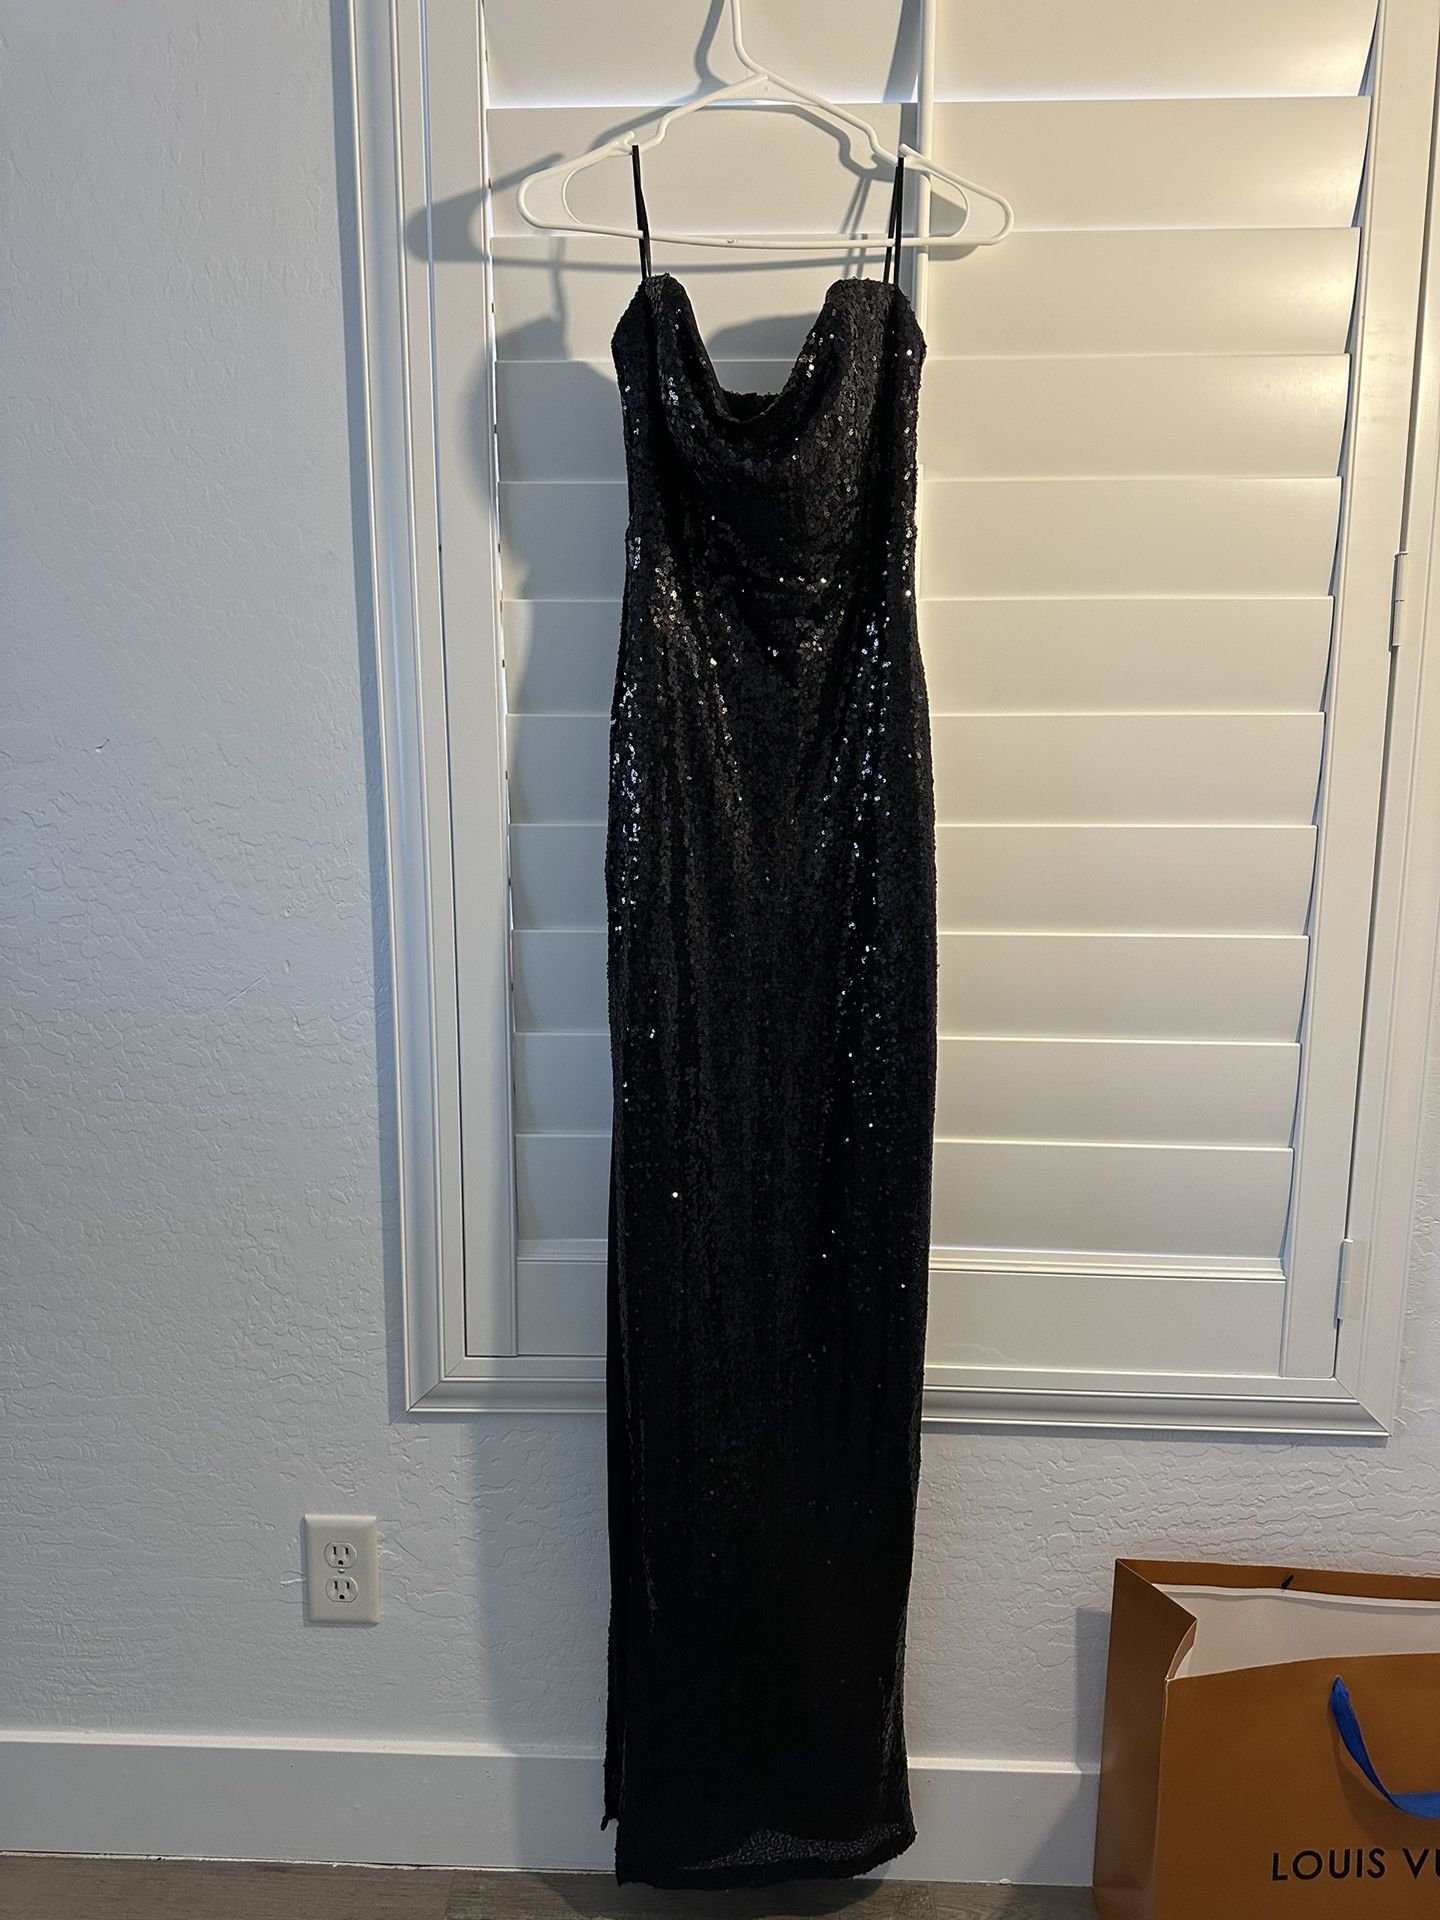 Black Prom dress